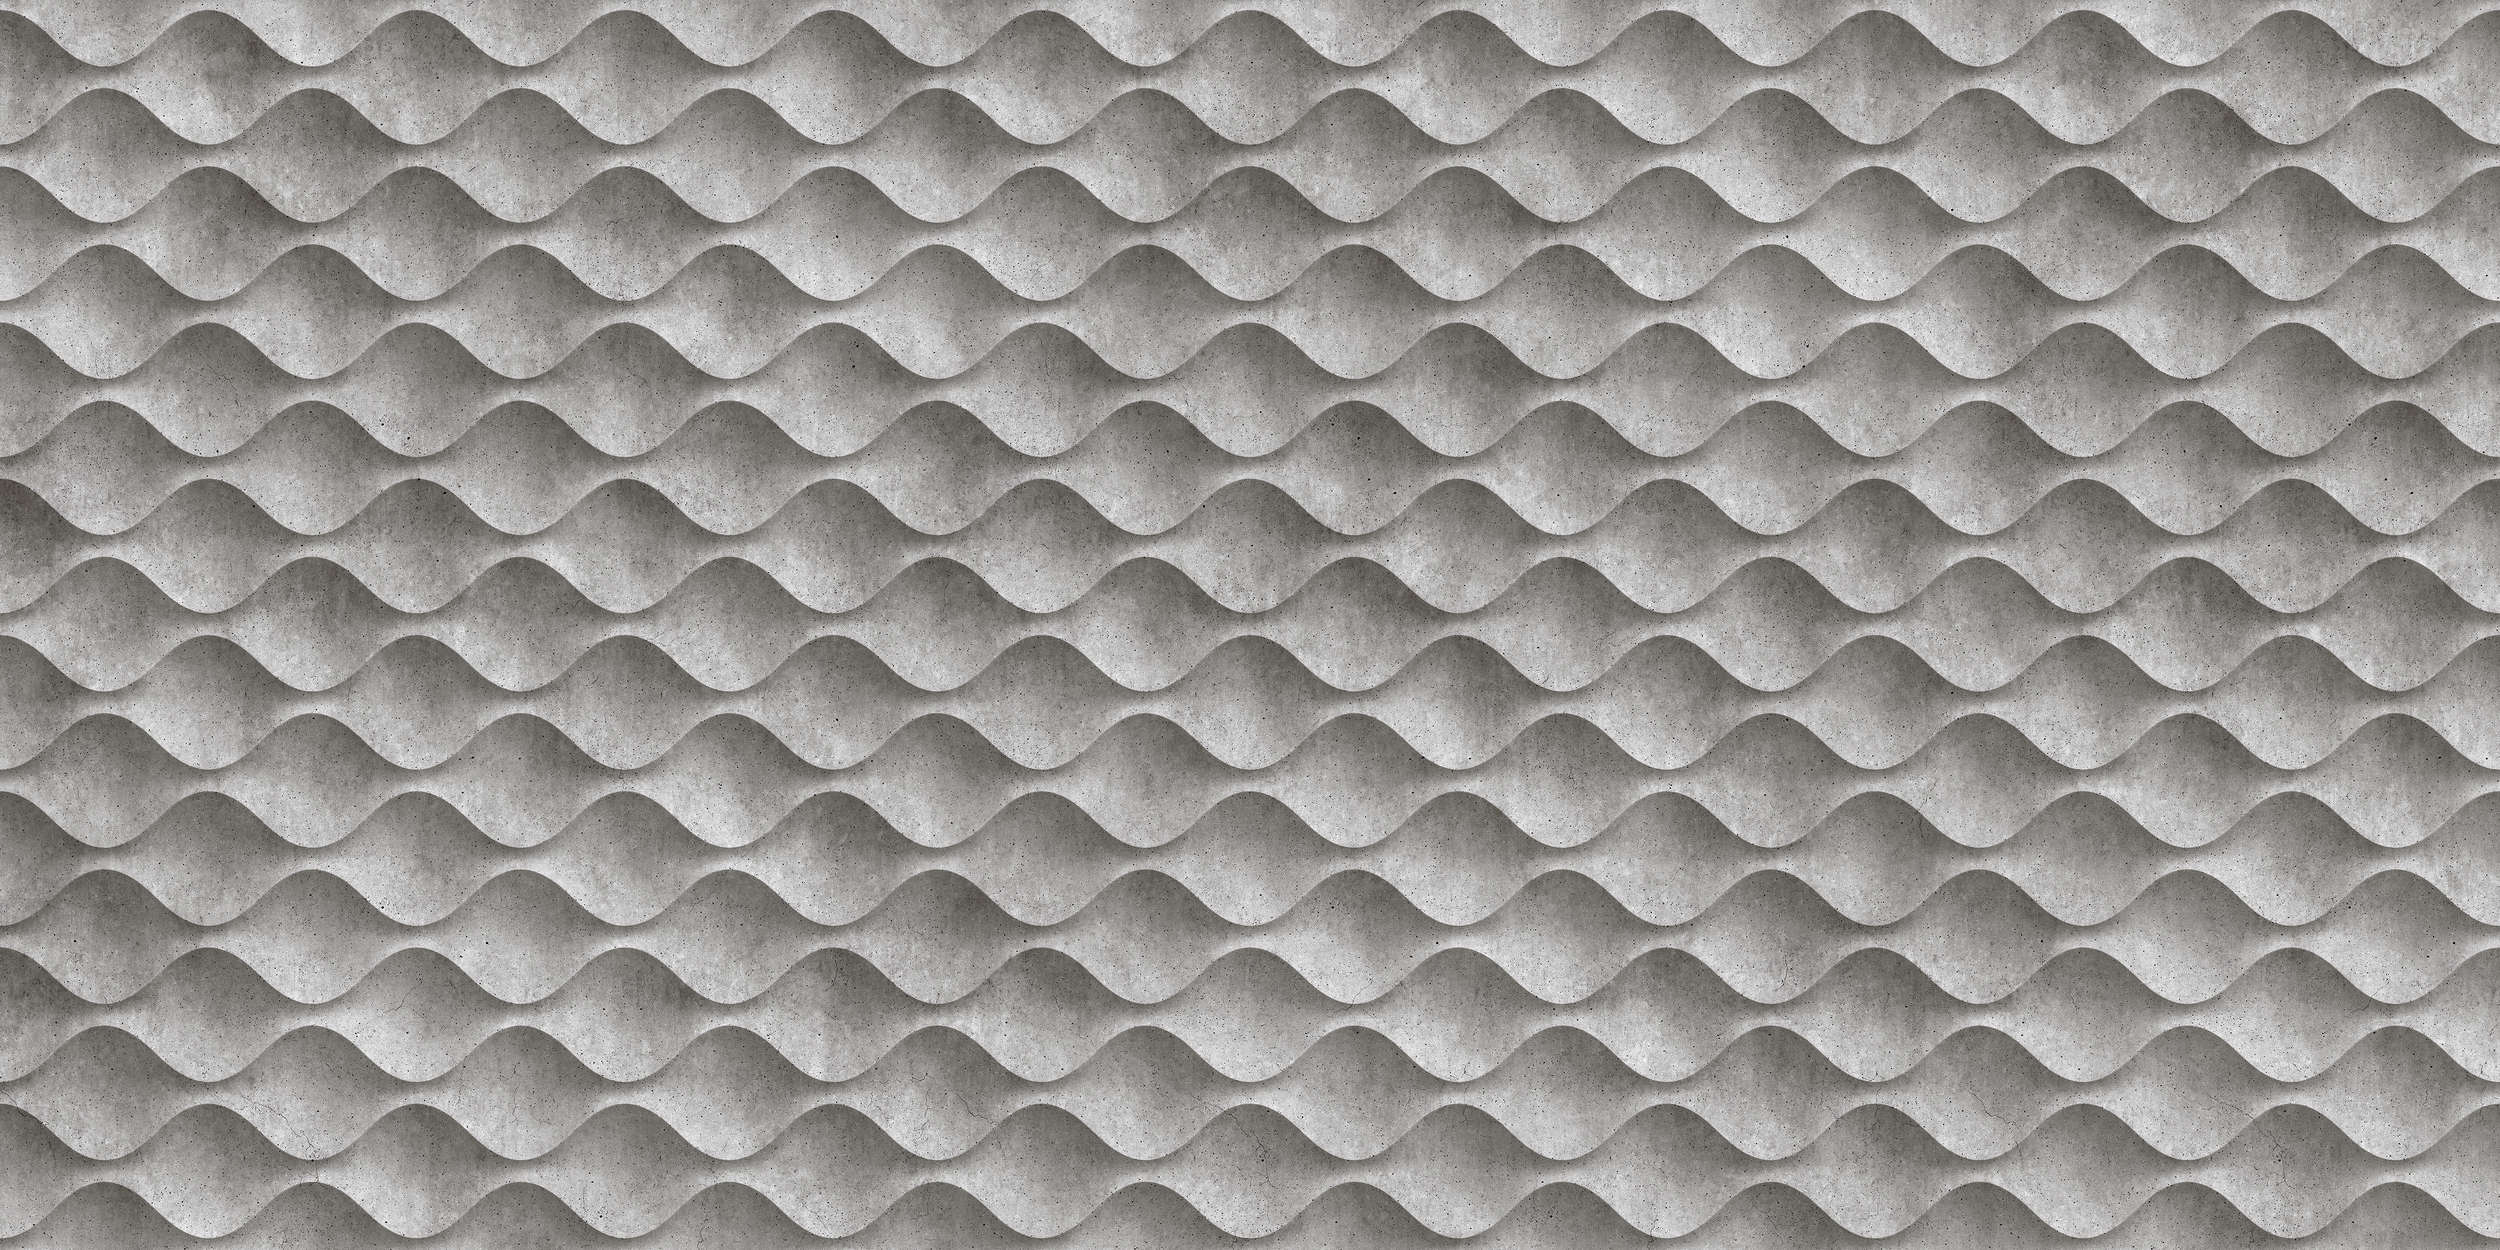             Concrete 1 - Coole 3D Beton-Wellen Fototapete – Grau, Schwarz | Perlmutt Glattvlies
        